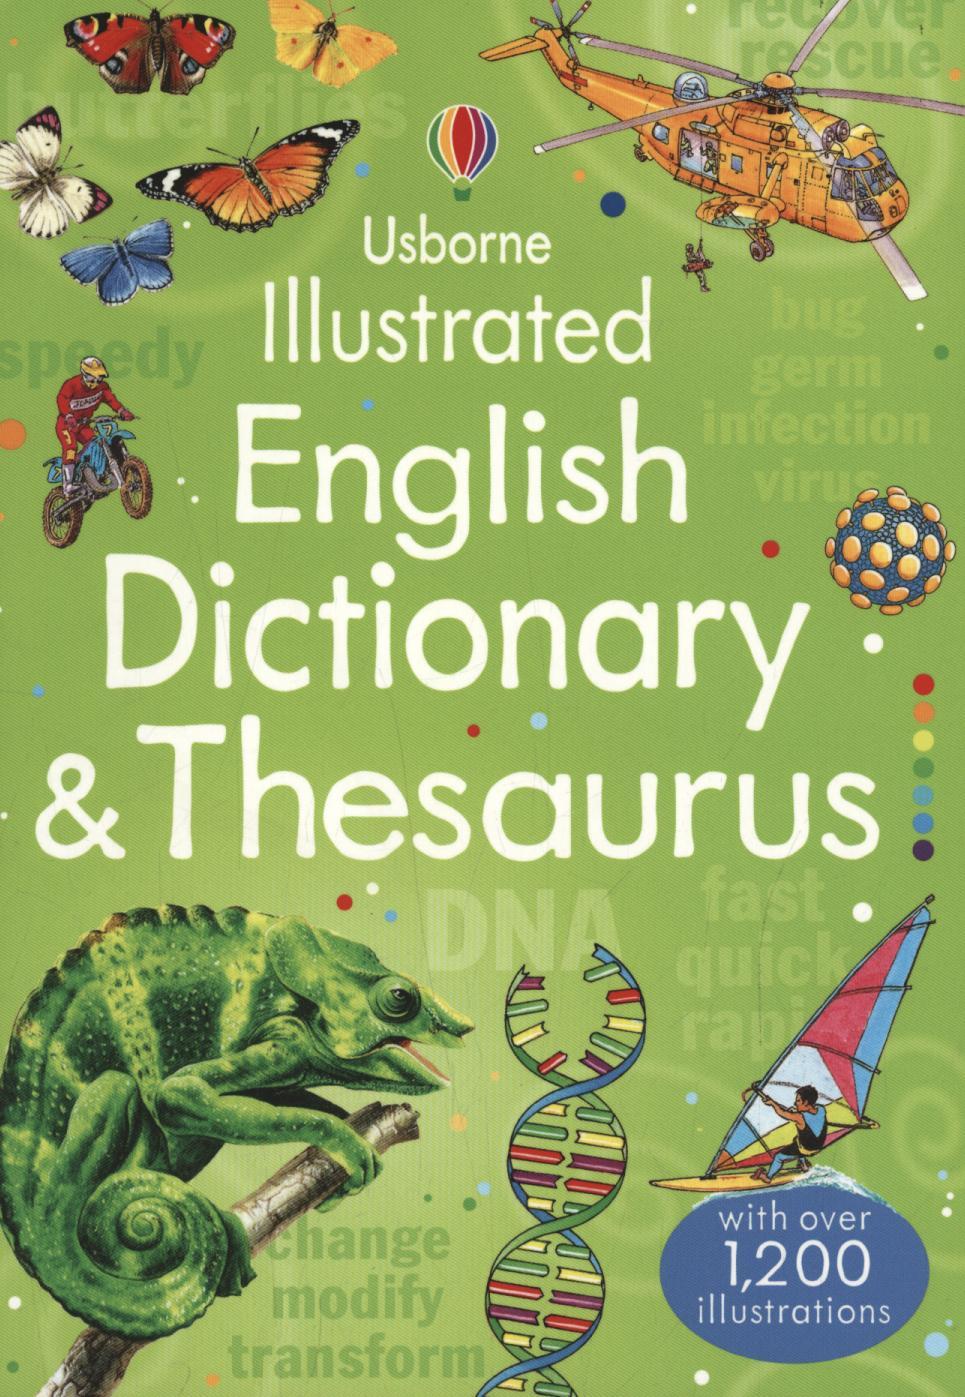 Illustrated English Dictionary & Thesaurus